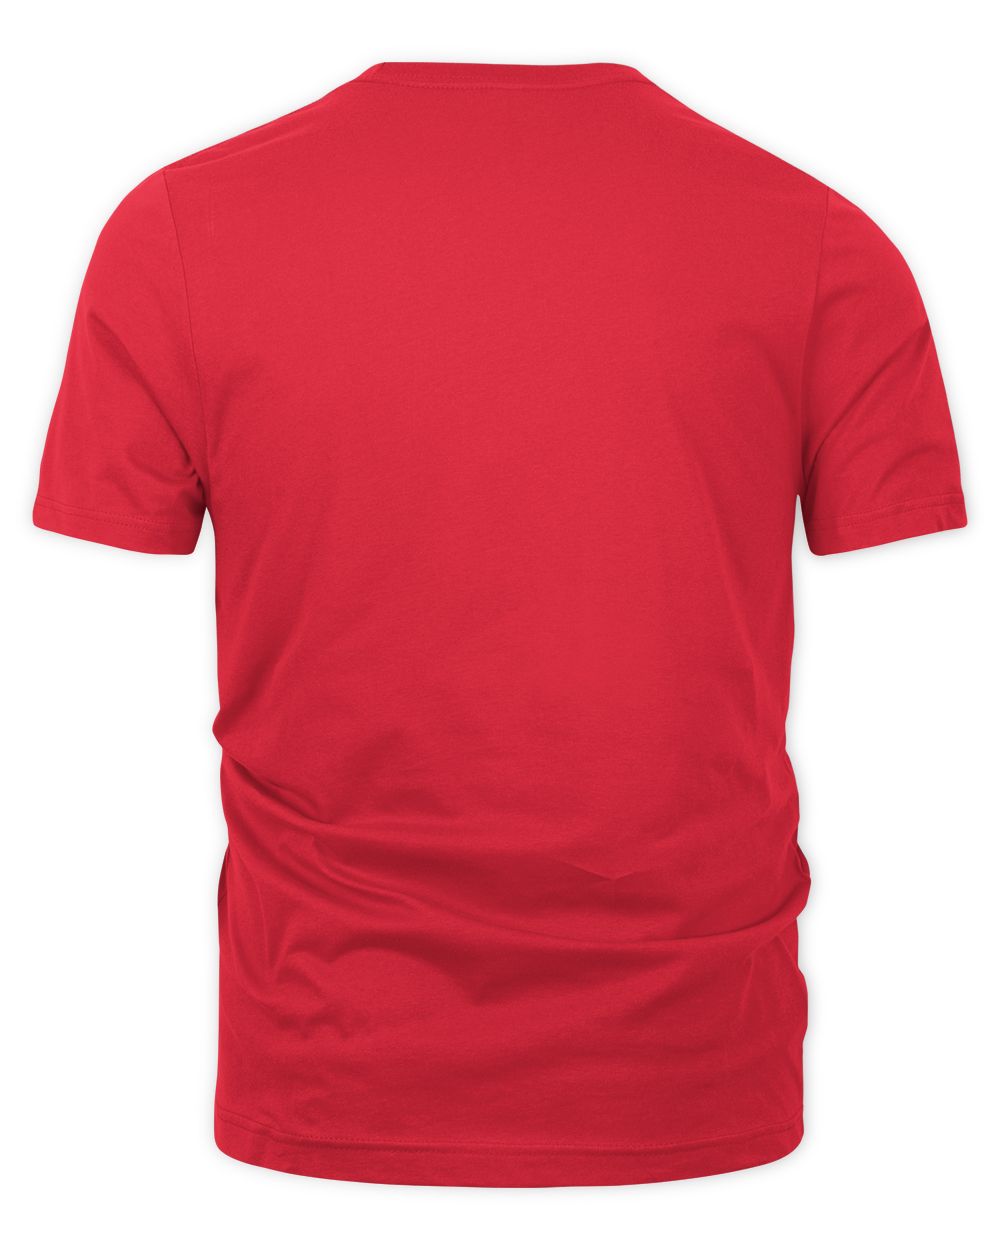 Last Podcast On The Left Merch The Reaper Shirt Unisex Premium T-Shirt red 